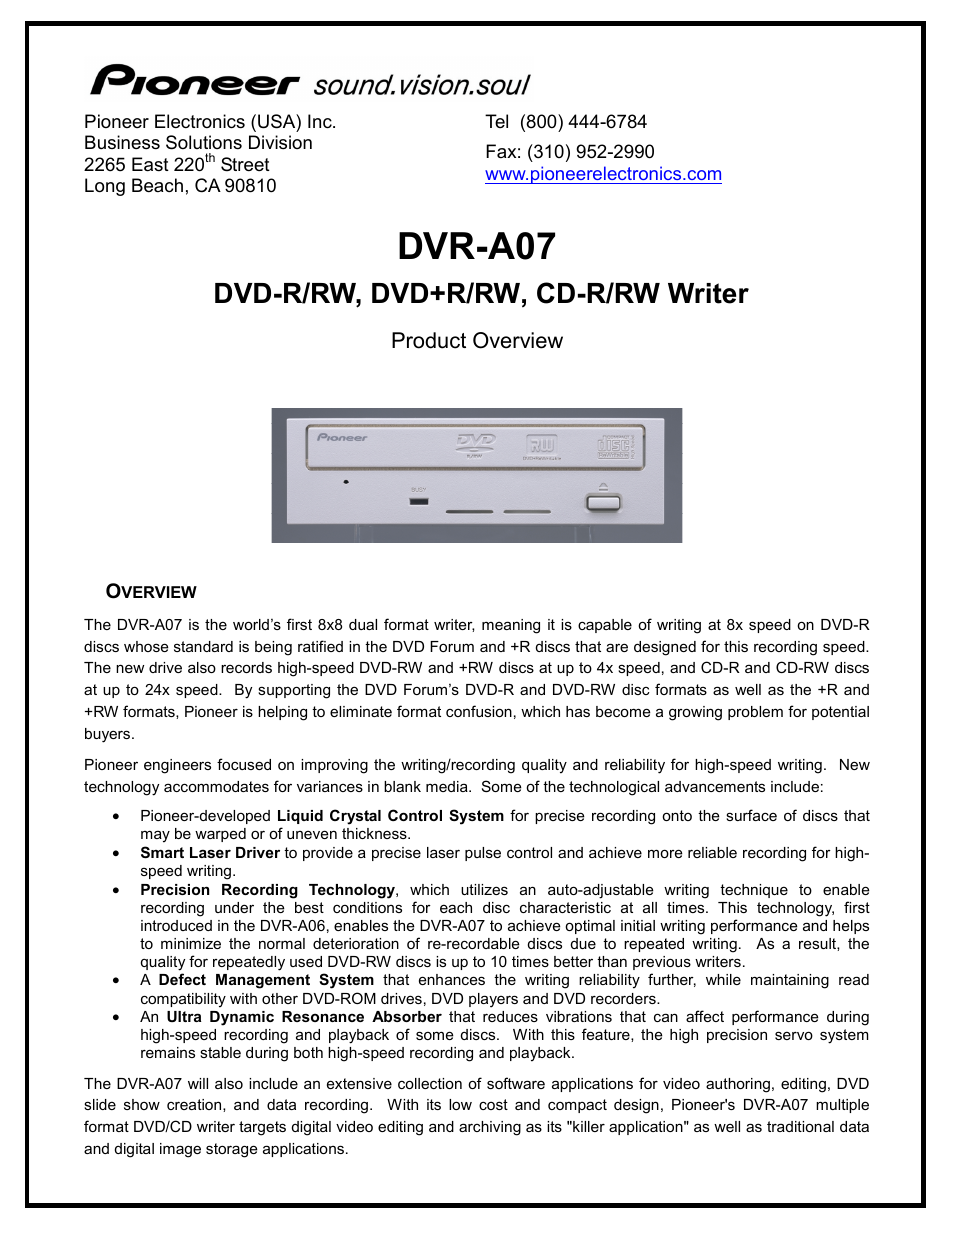 DVR-107